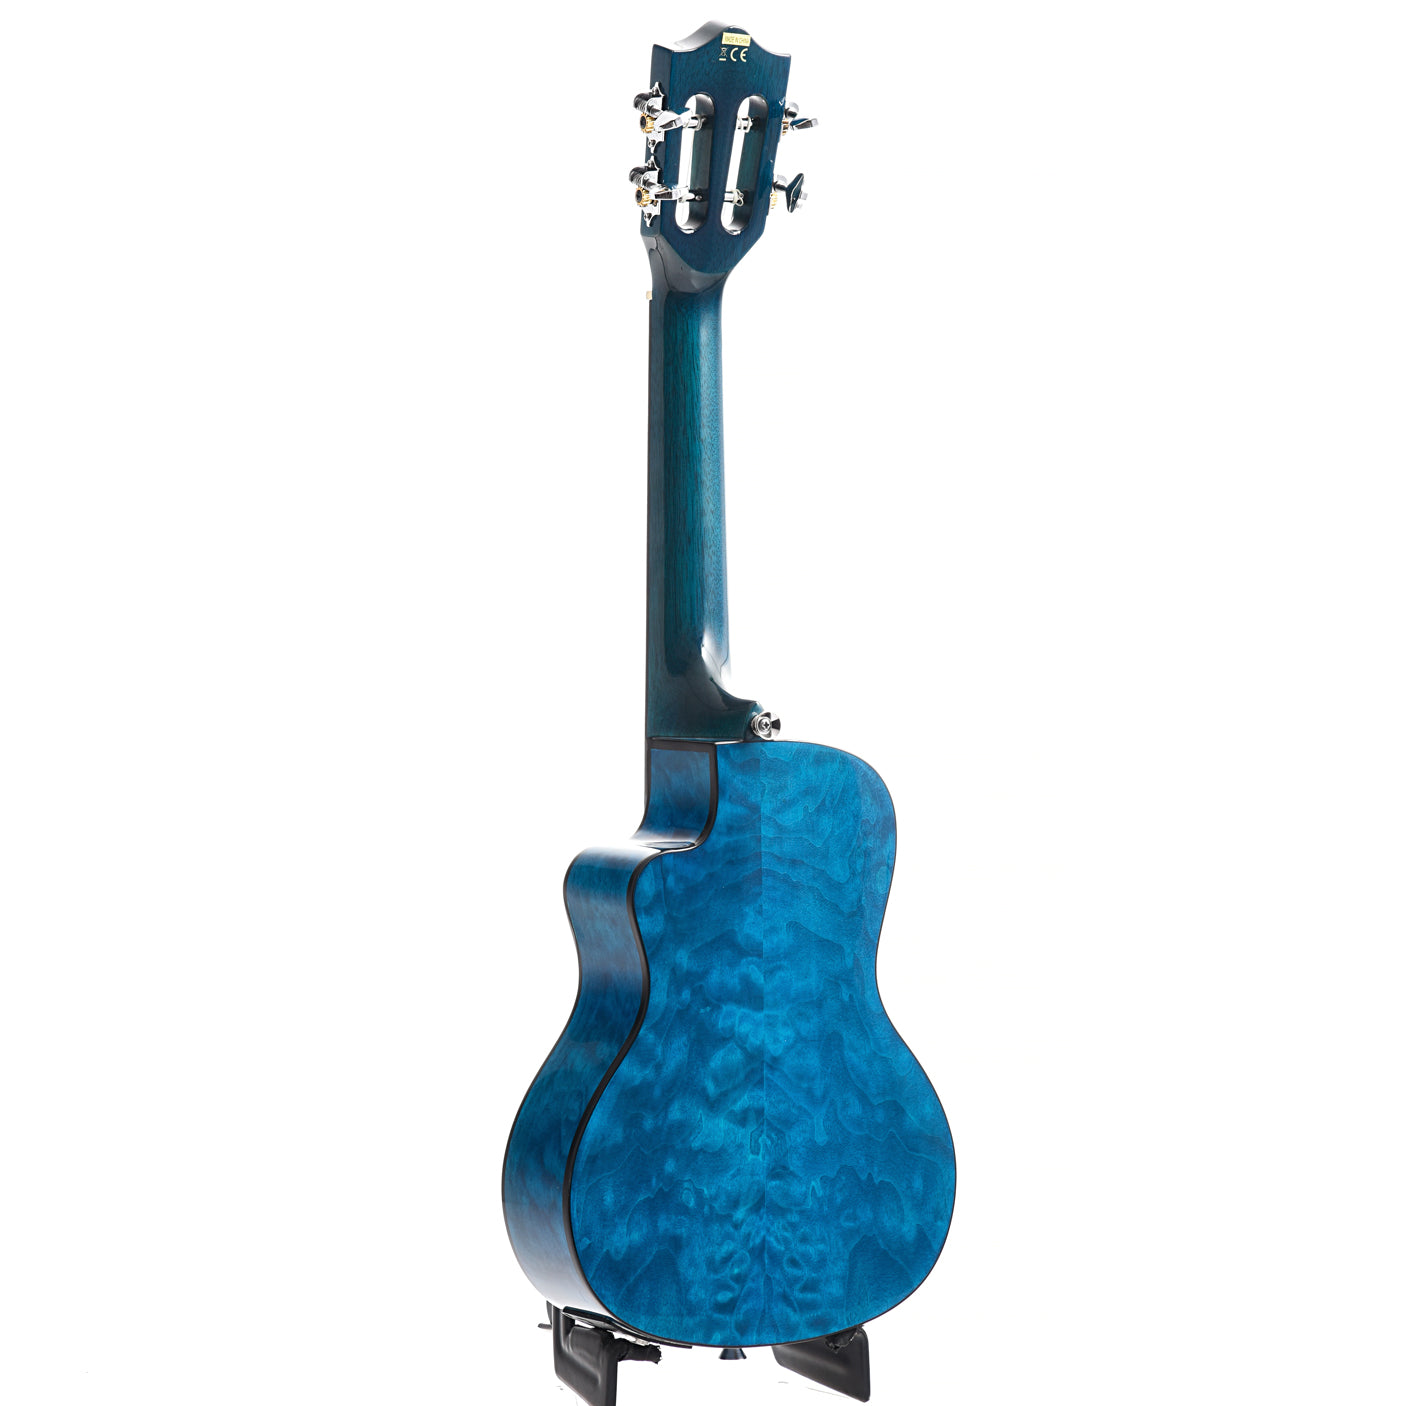 Image 10 of Lanikai Quilted Maple Blue Stain A/E Concert Ukulele & Case - SKU# QM-BLCEC : Product Type Concert Ukuleles : Elderly Instruments